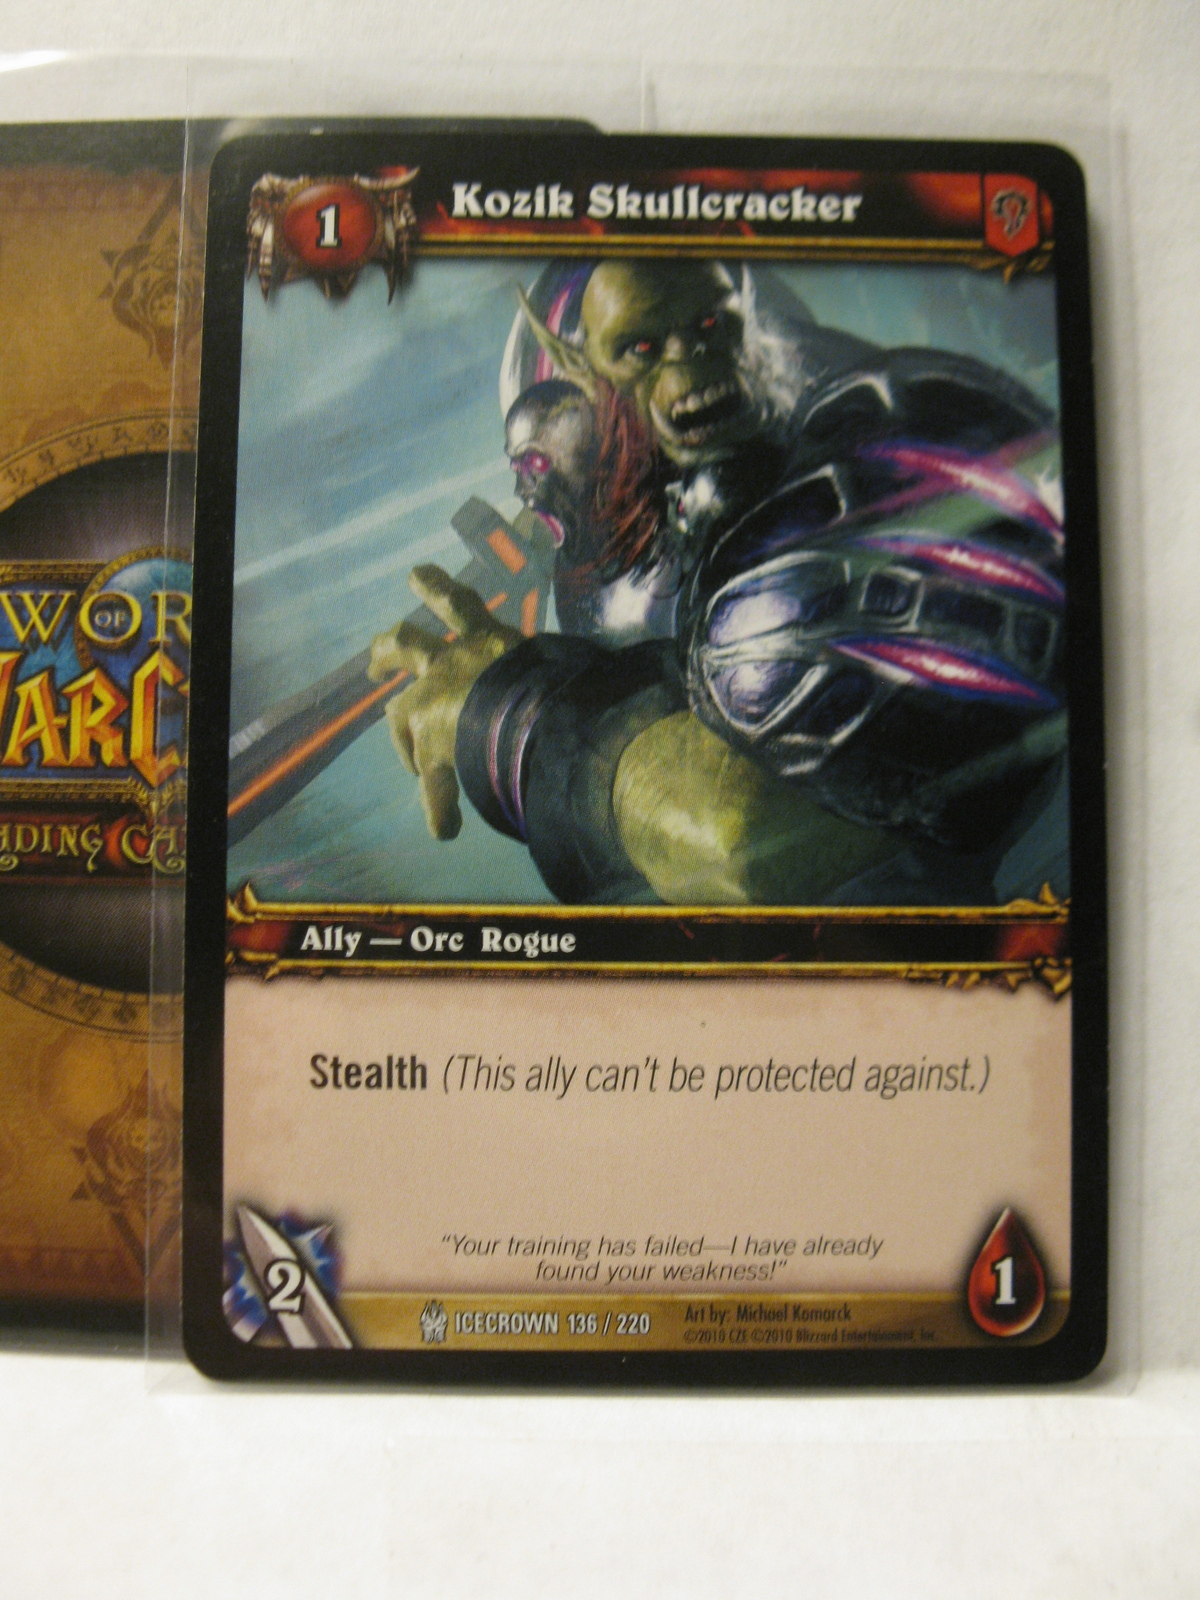 Primary image for (TC-1577) 2010 World of Warcraft Trading Card #136/220: Kozik Skullcracker